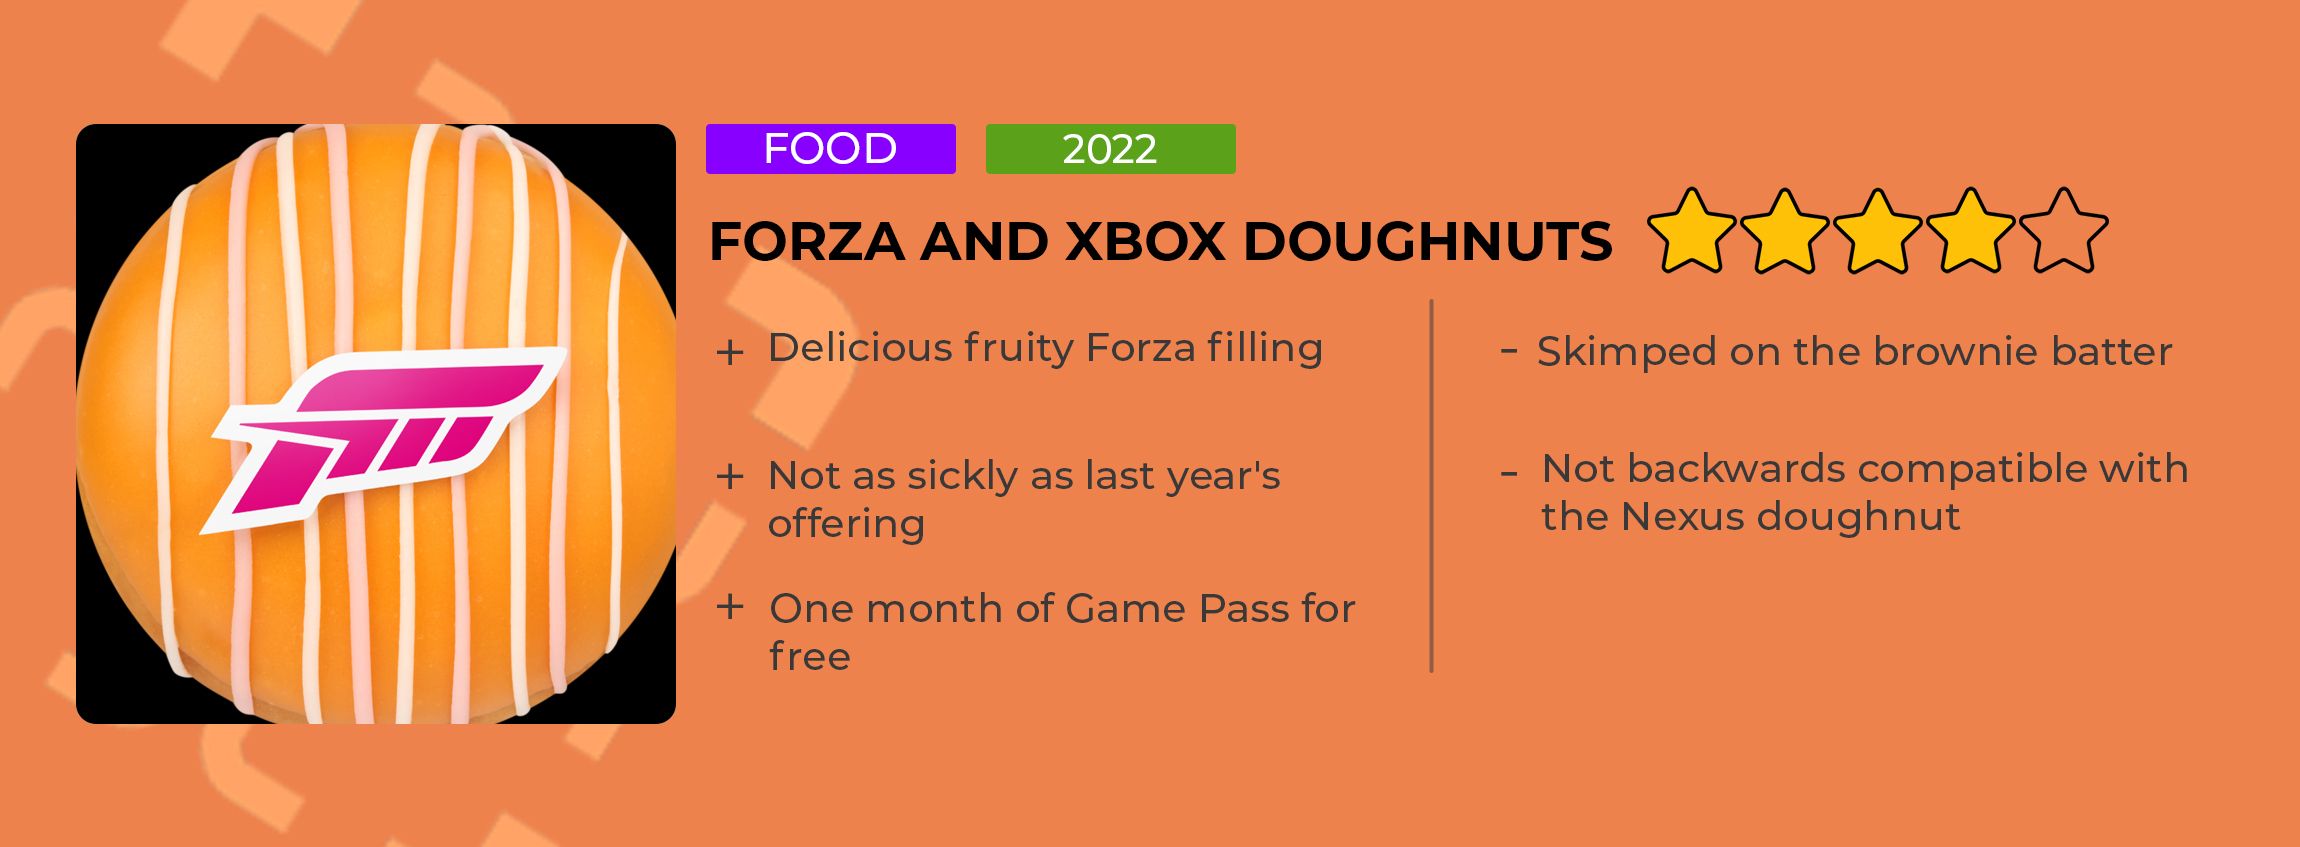 forza_doughnut_review_card